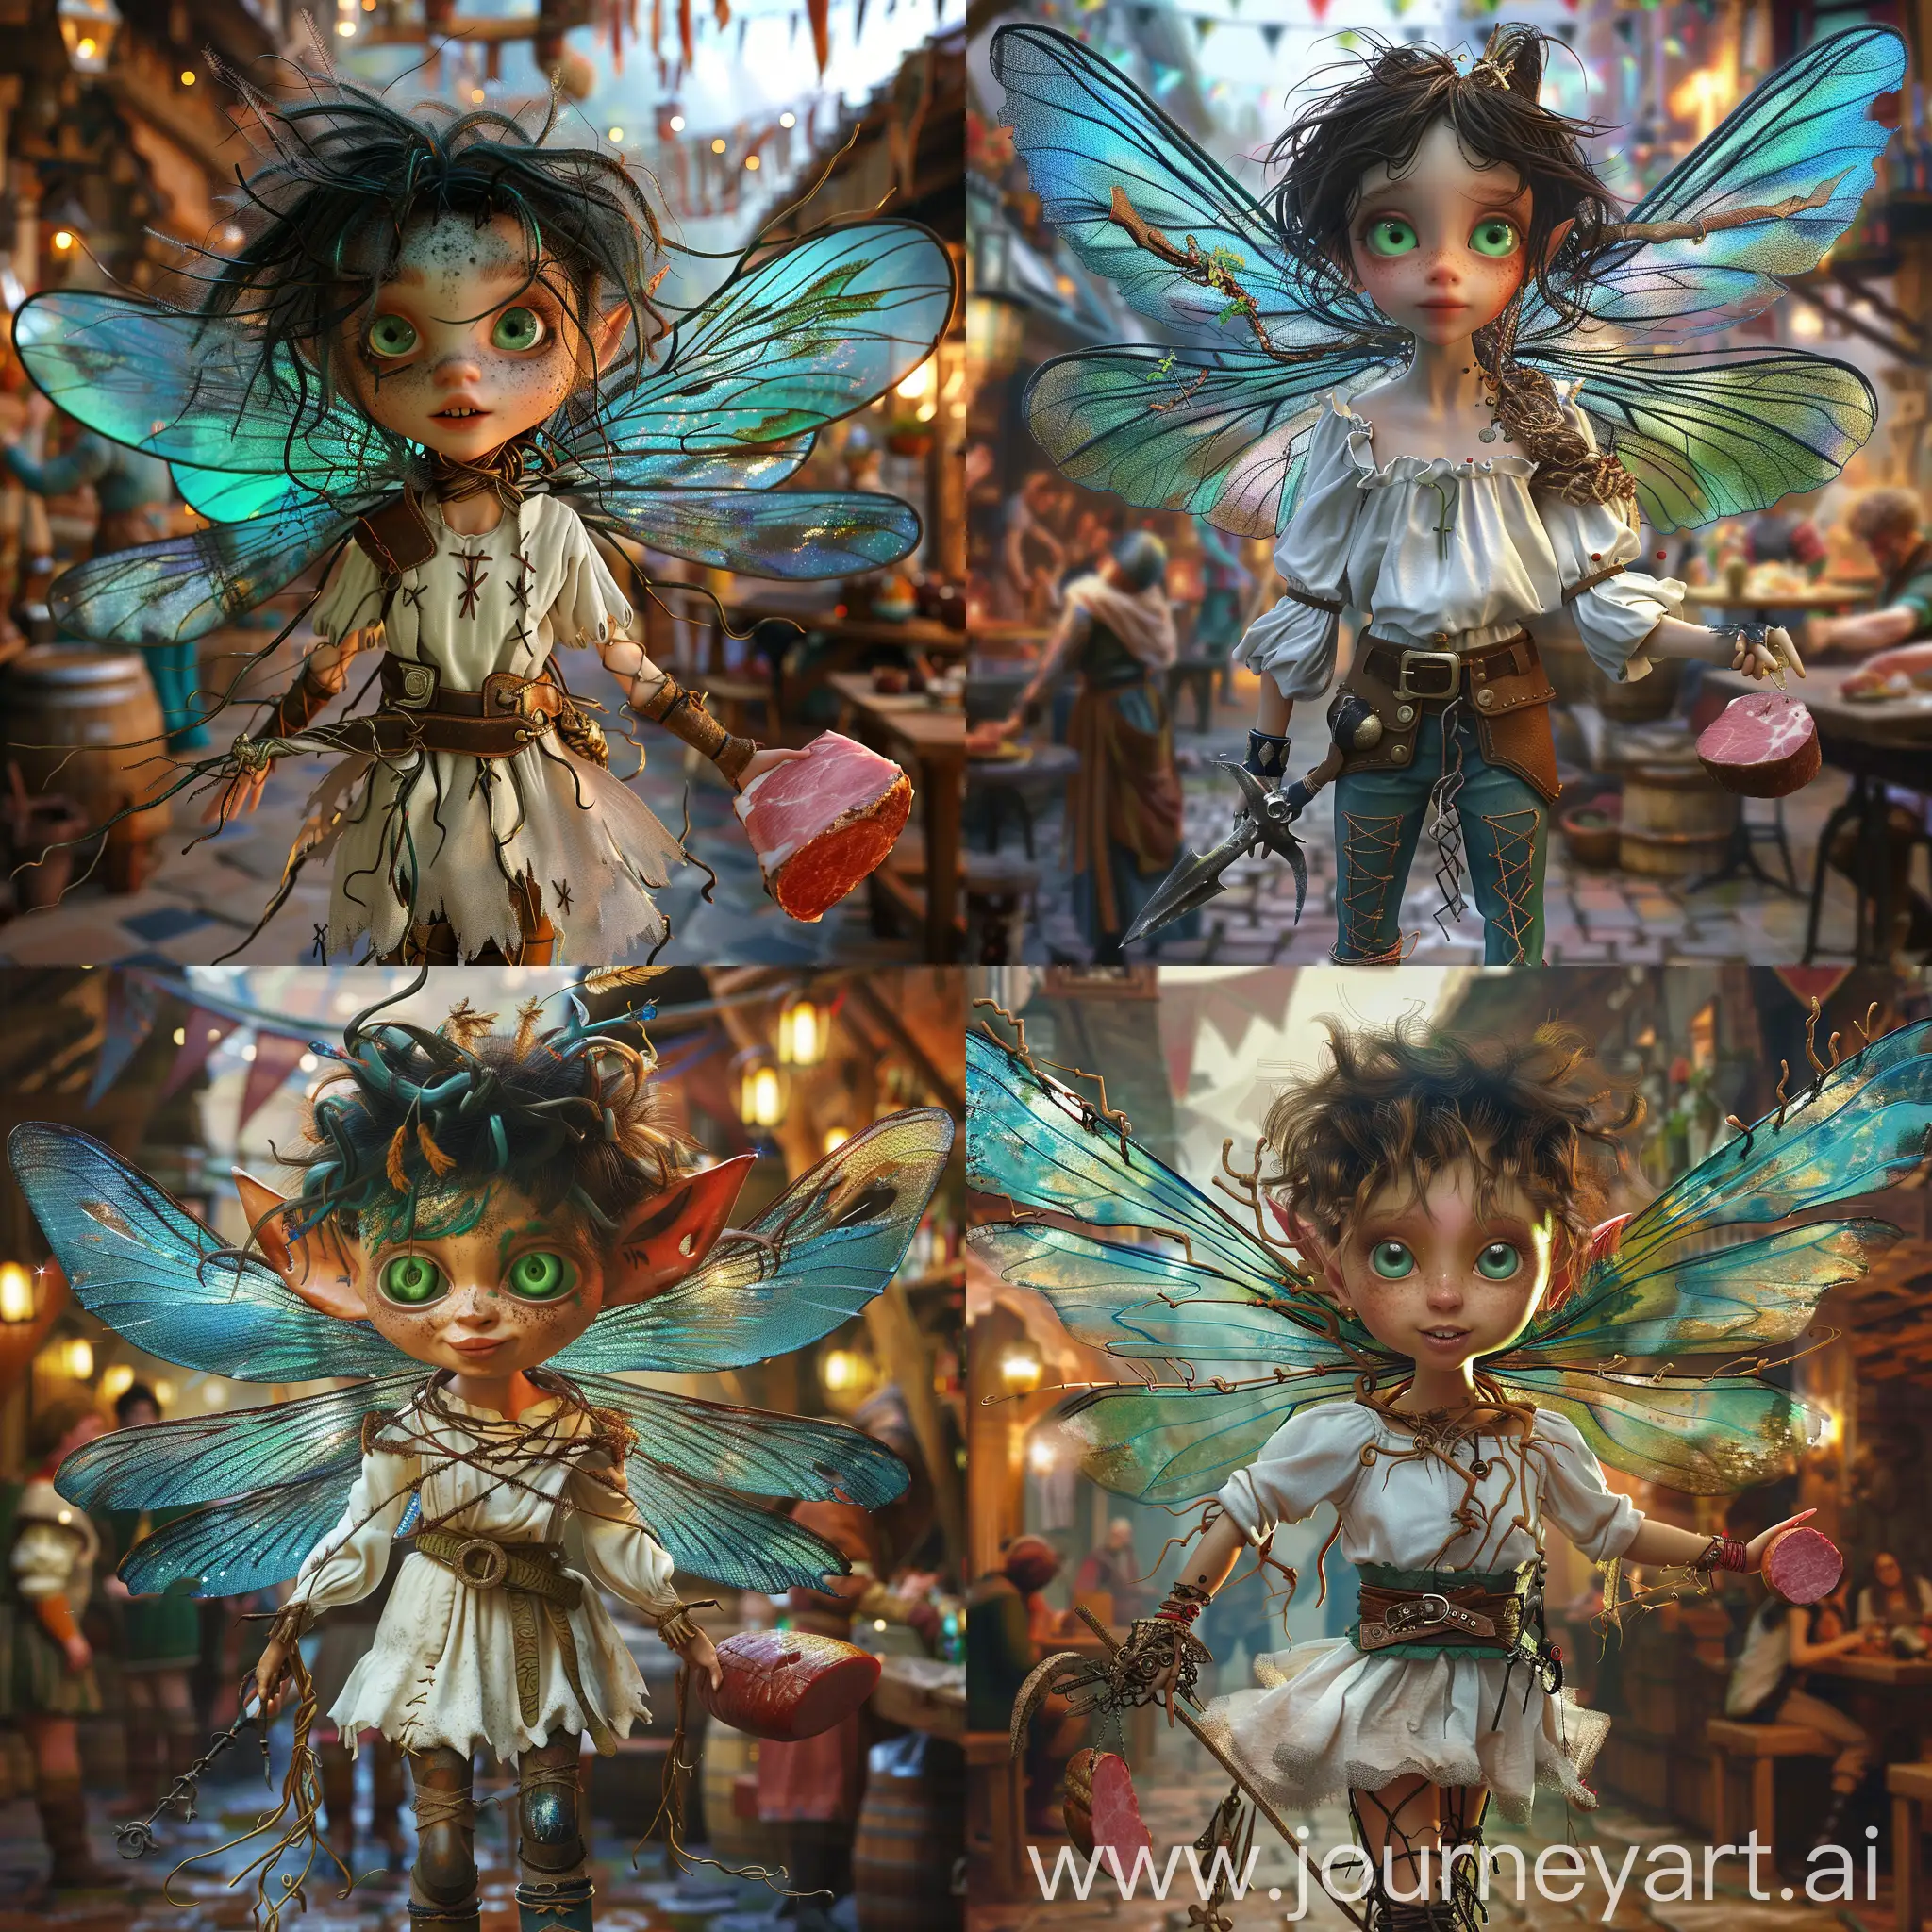 Joyful-Fairy-Girl-with-Dragonfly-Wings-Enjoying-Pork-Ham-in-Medieval-Tavern